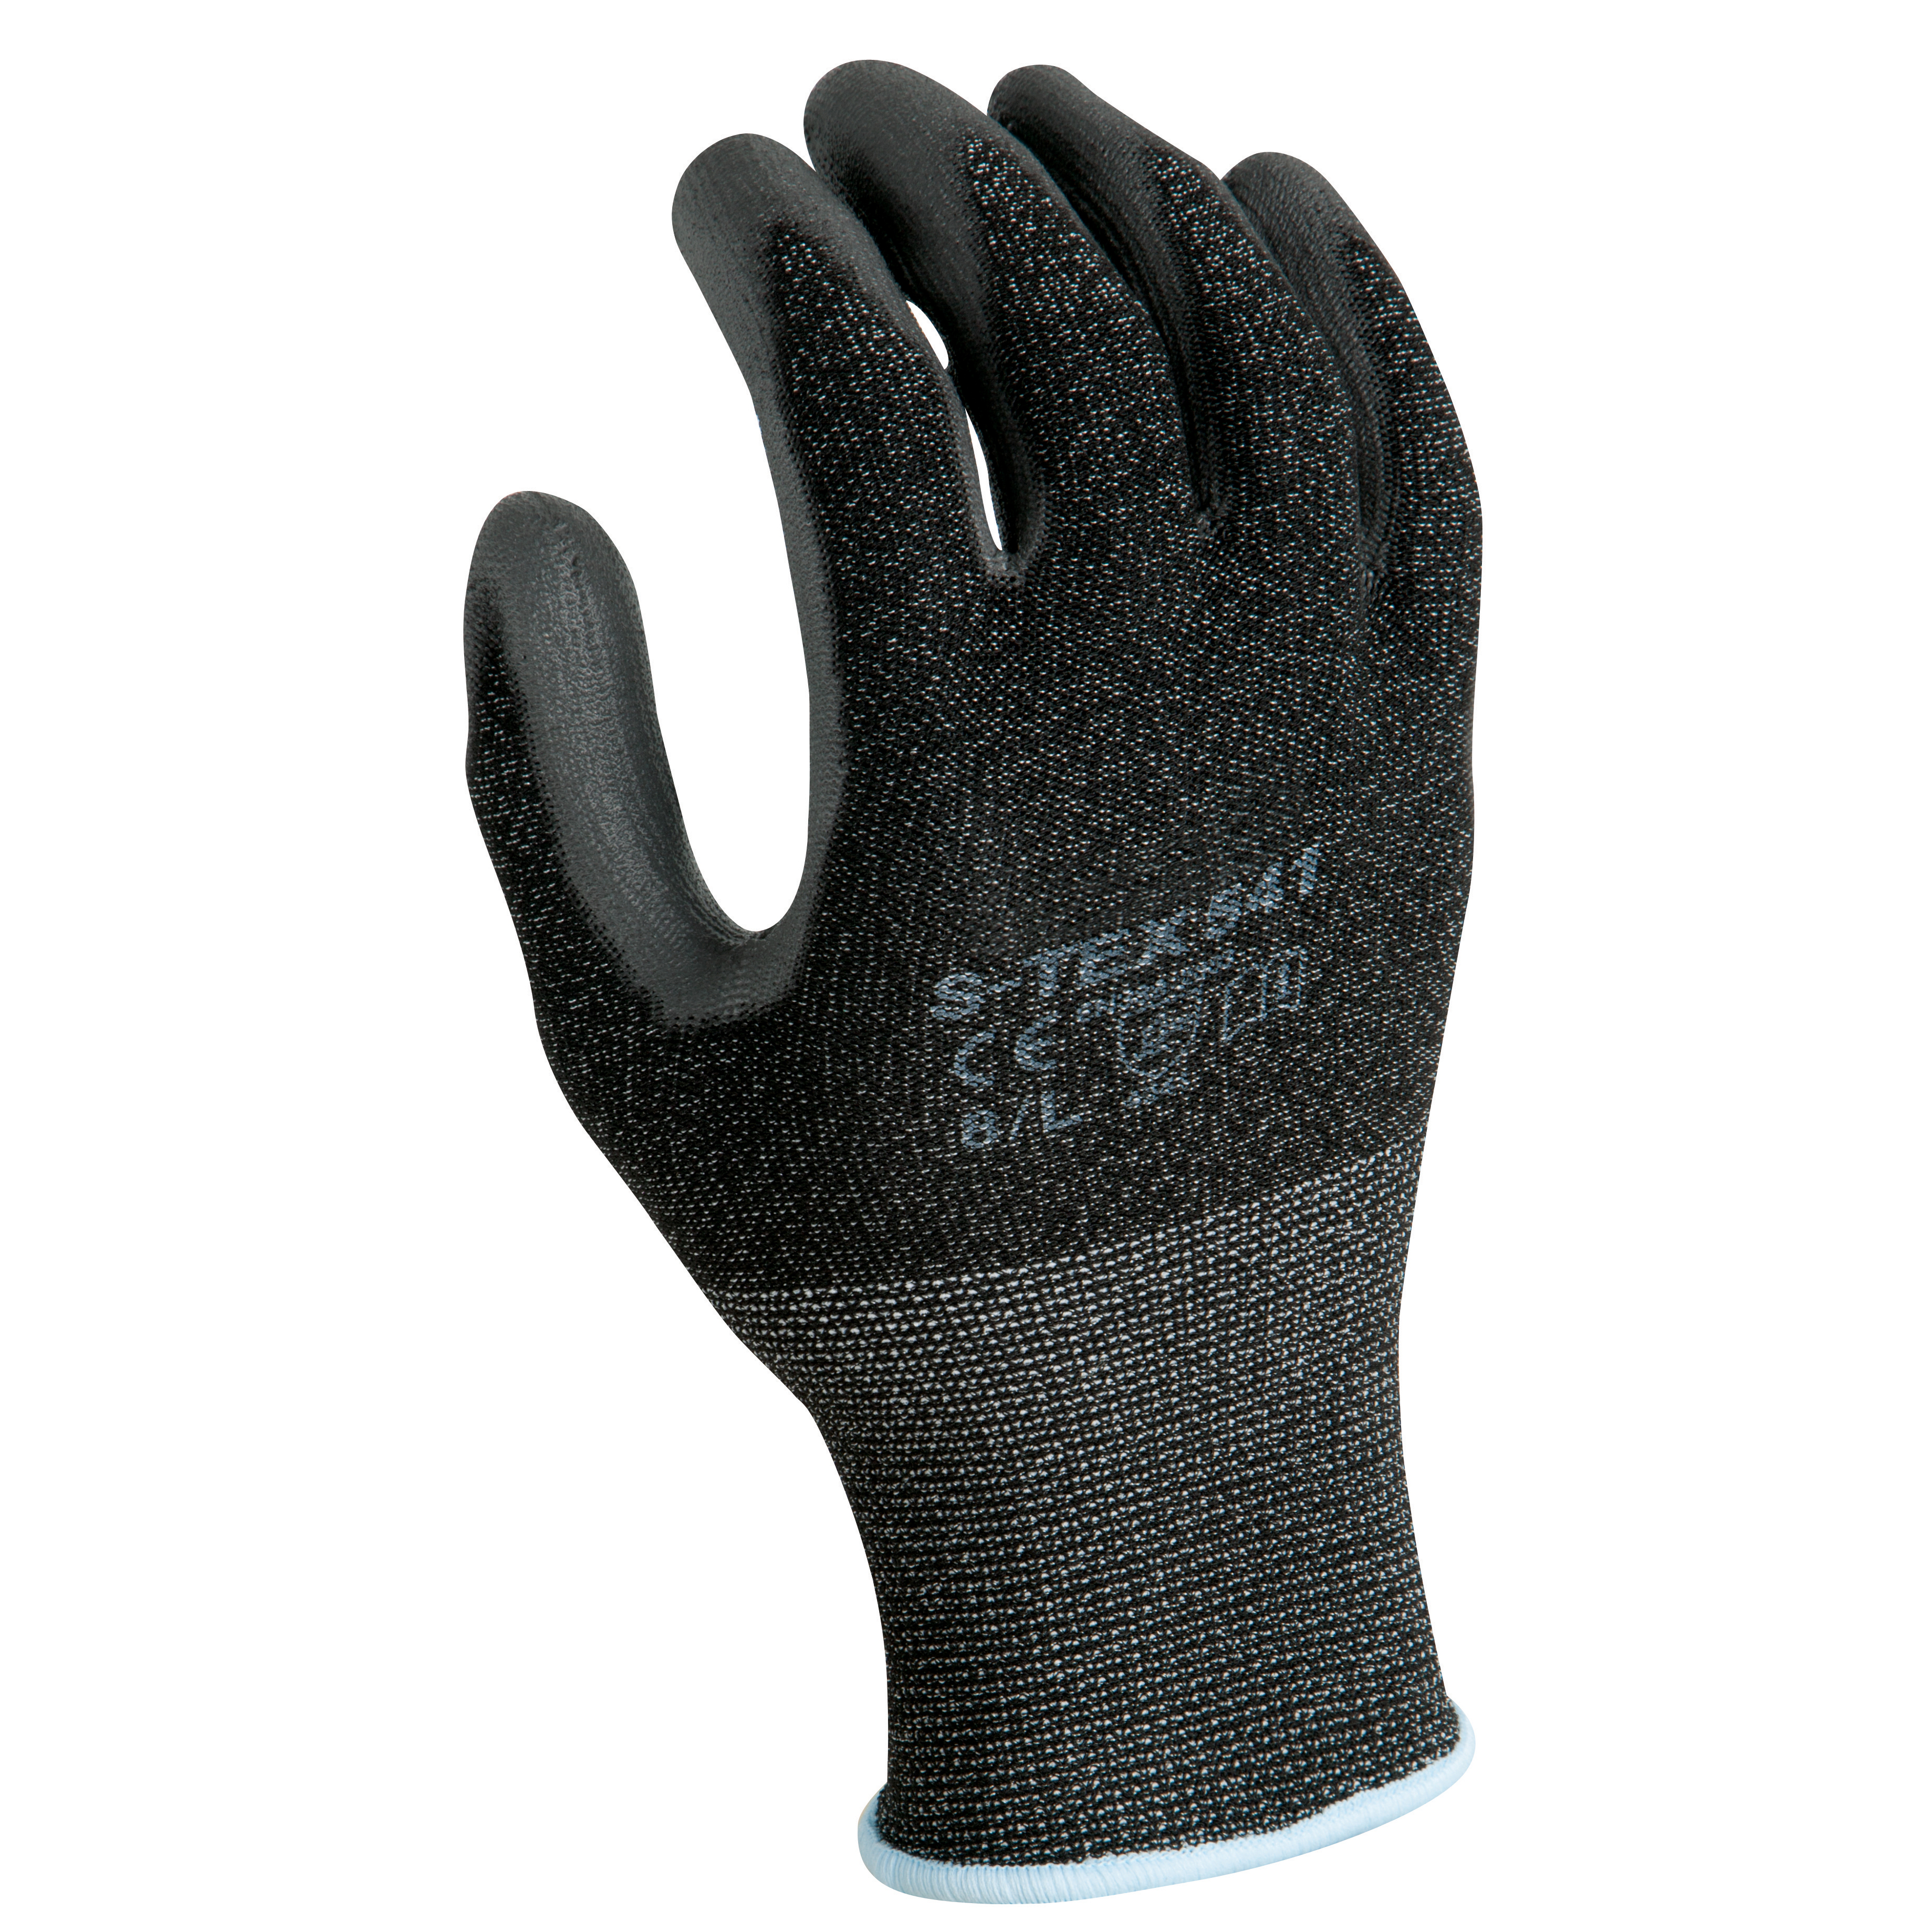 P-Grip Polyurethane Coated Glove, White/White, SM-LG, 12/pair